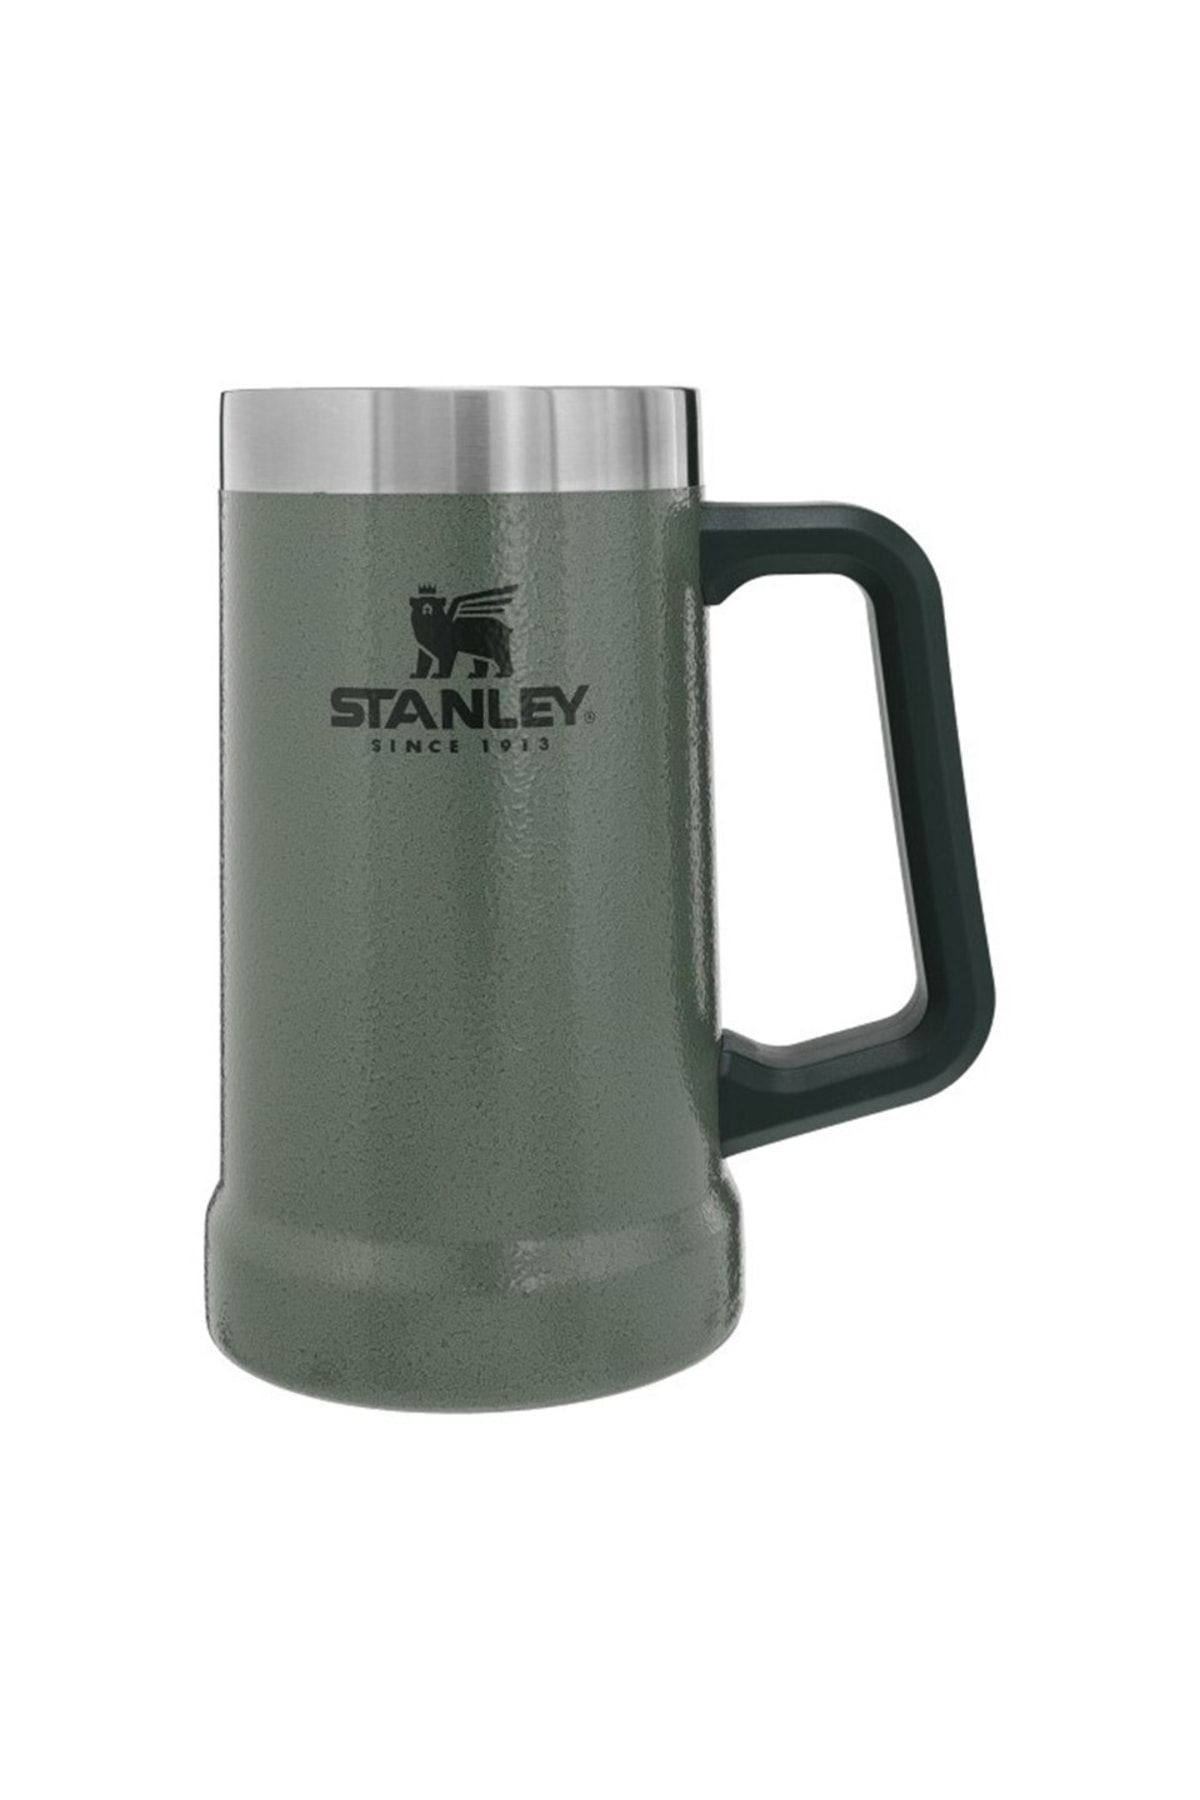 Stanley 0.7l Adventure Big Grip Beer Stein - Bira Bardağı - Yeşil